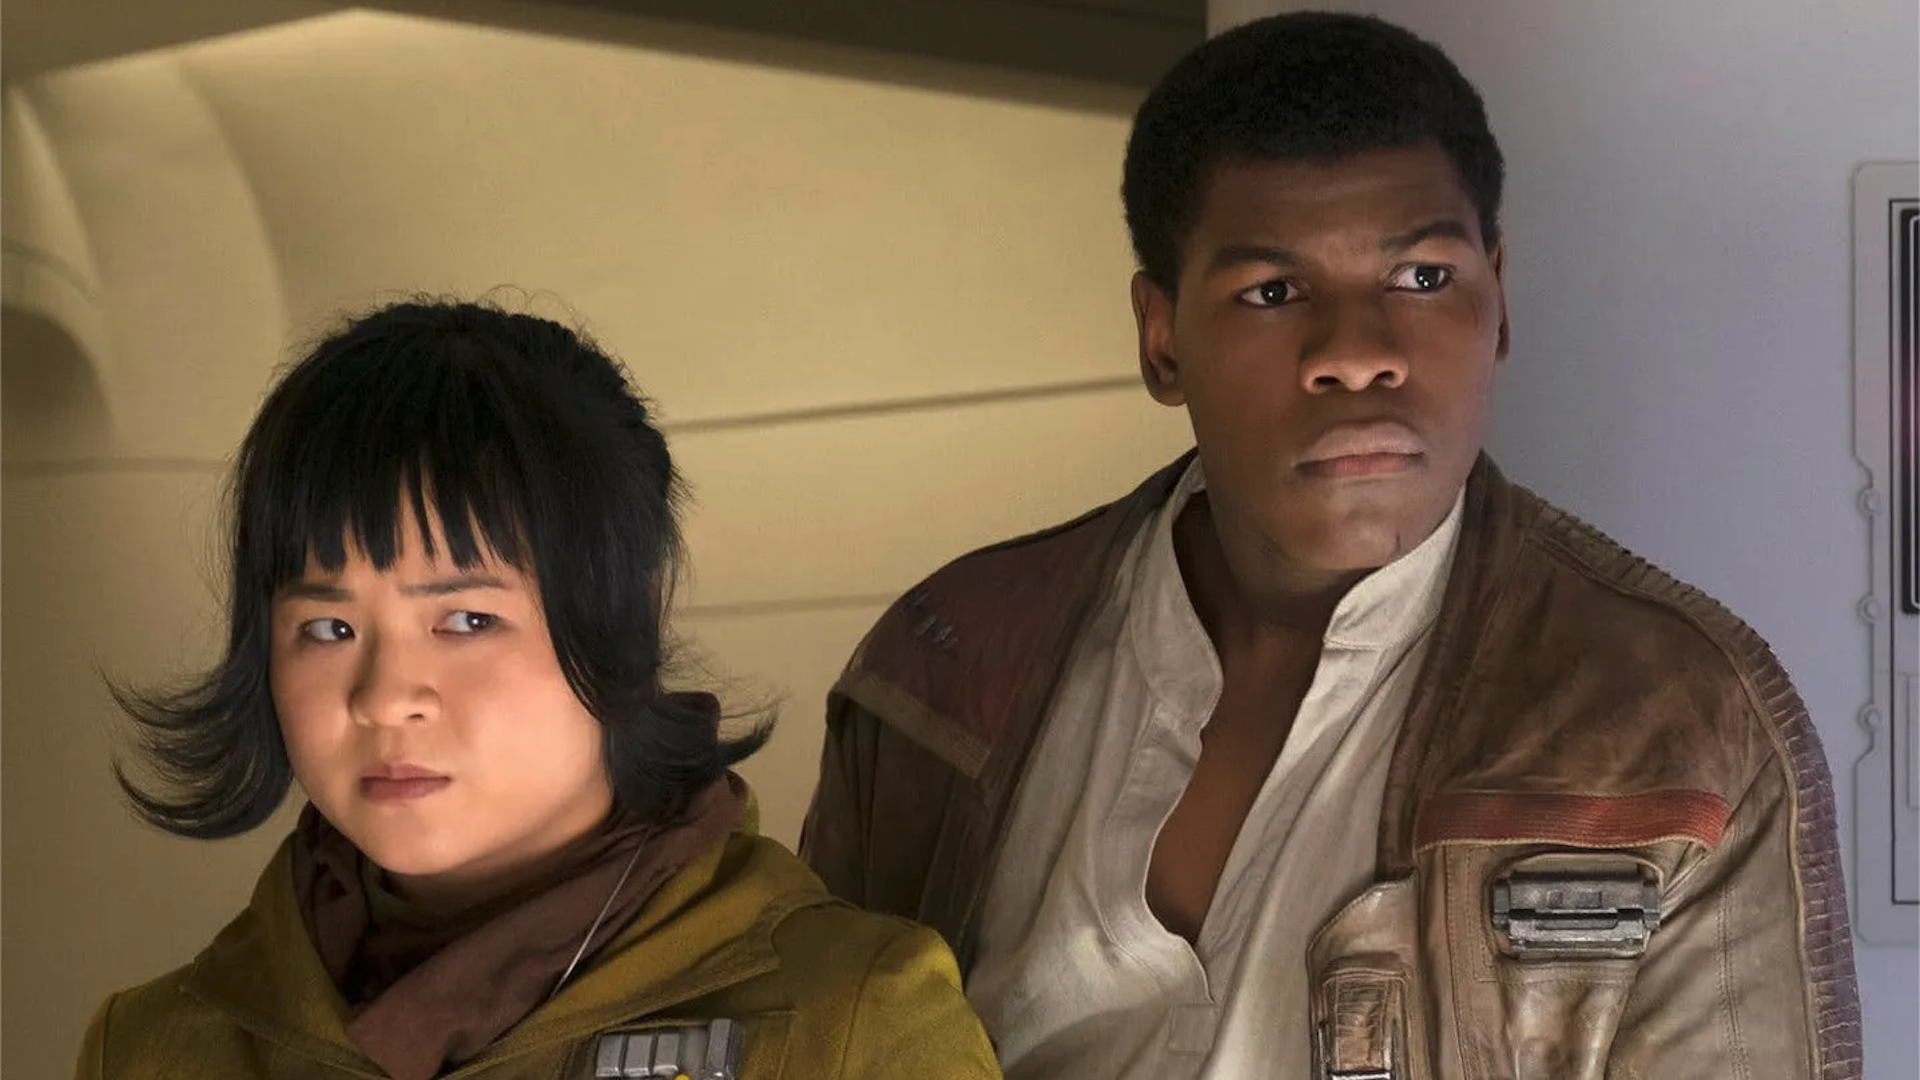 Finn and Rose in The Last Jedi